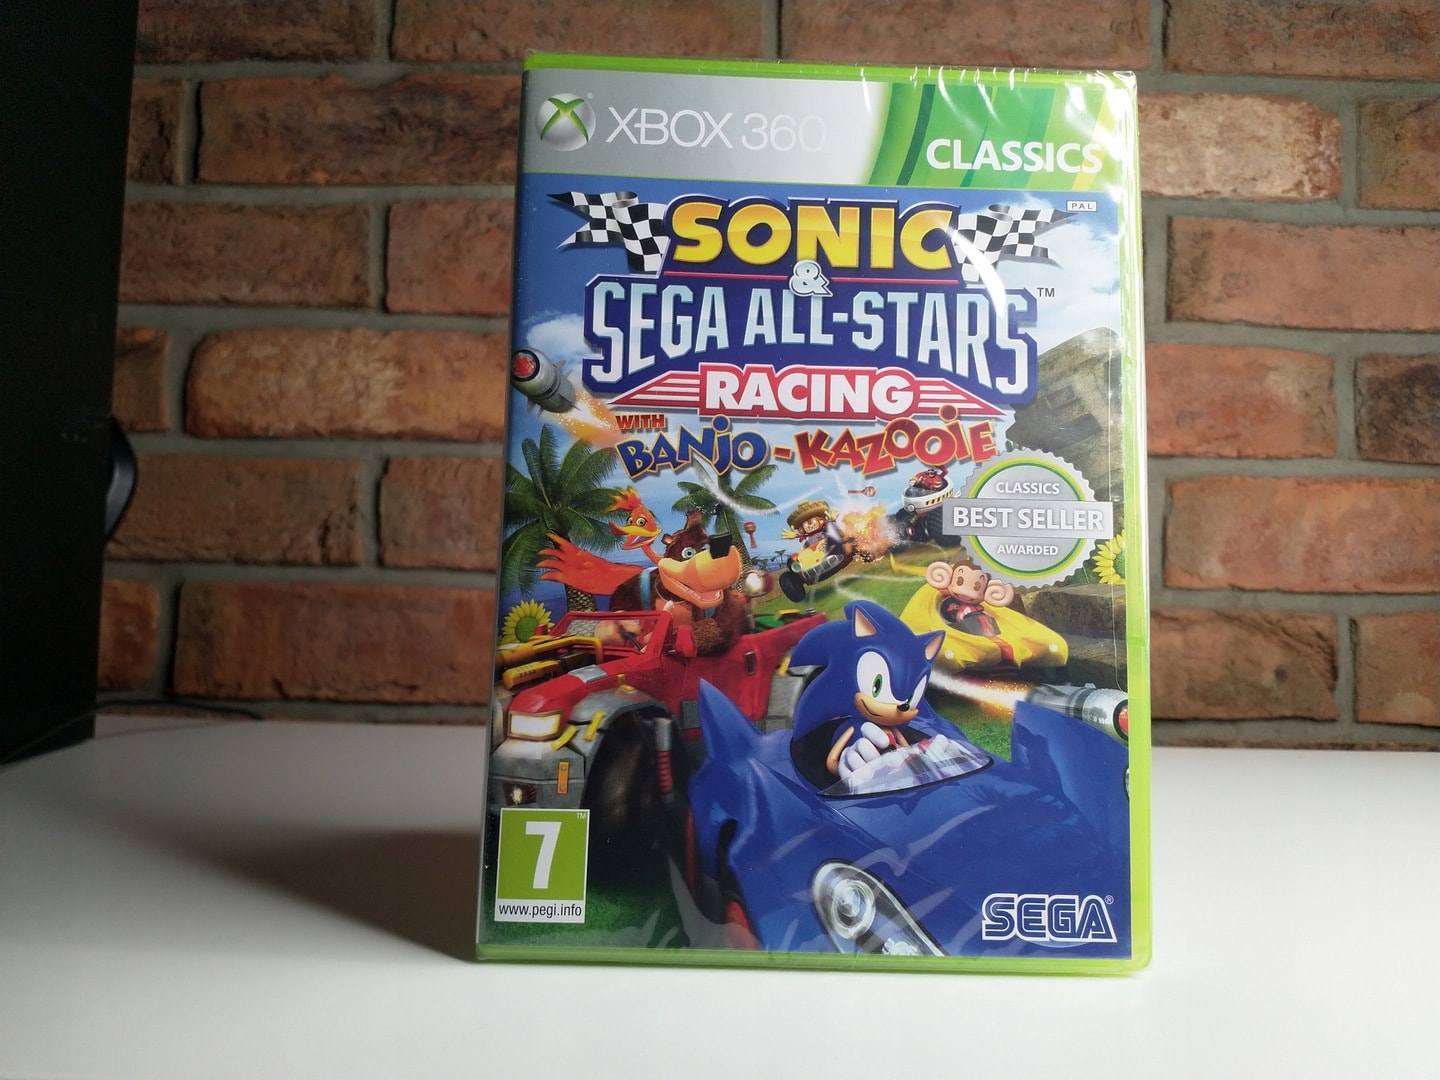 Sonic and SEGA All-Stars Racing Nowa Gra Wyscigi Plyta DVD BOX Xbox 360 - 5